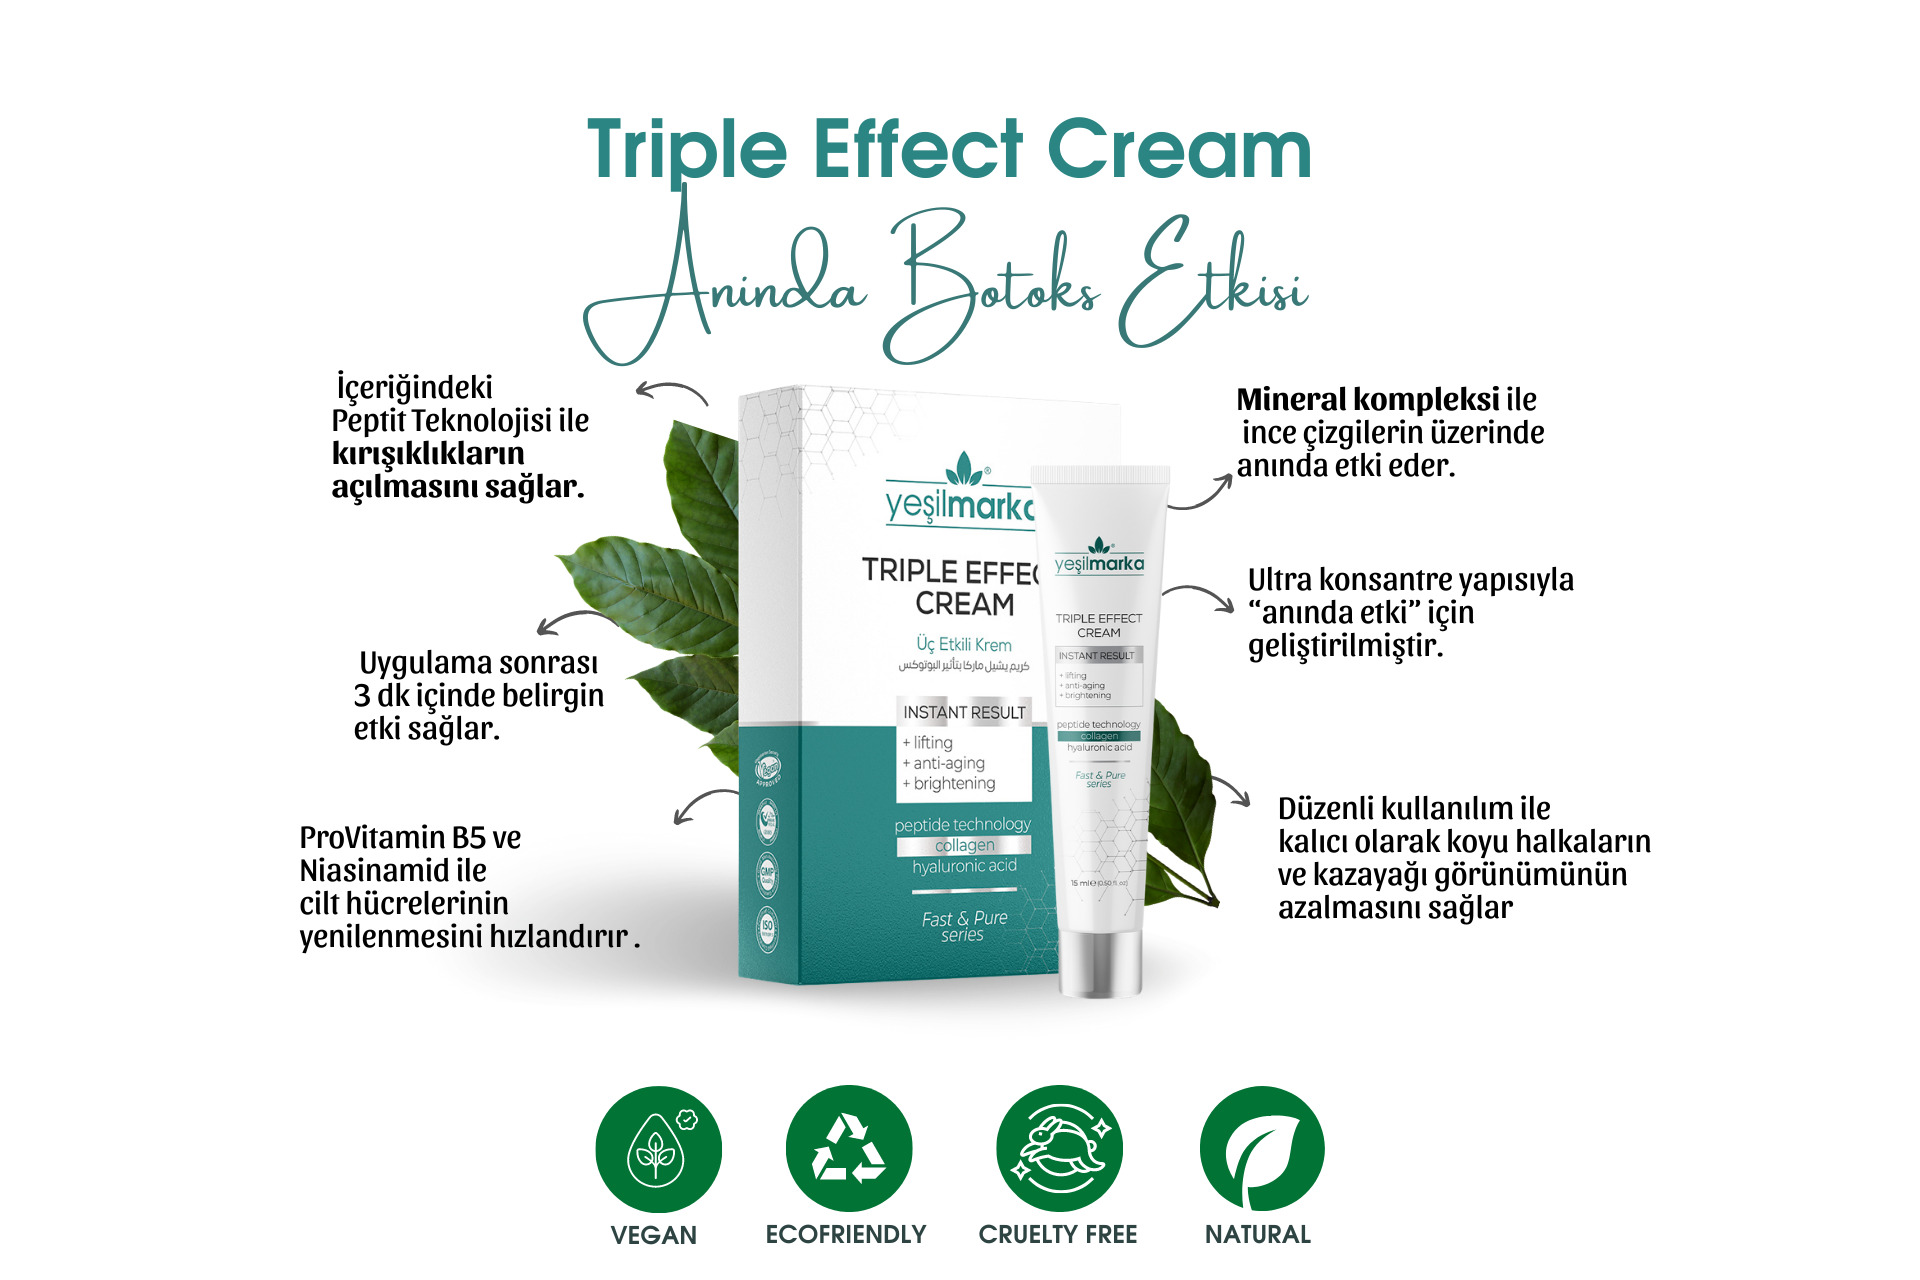 Yeşilmarka Triple Effect Cream